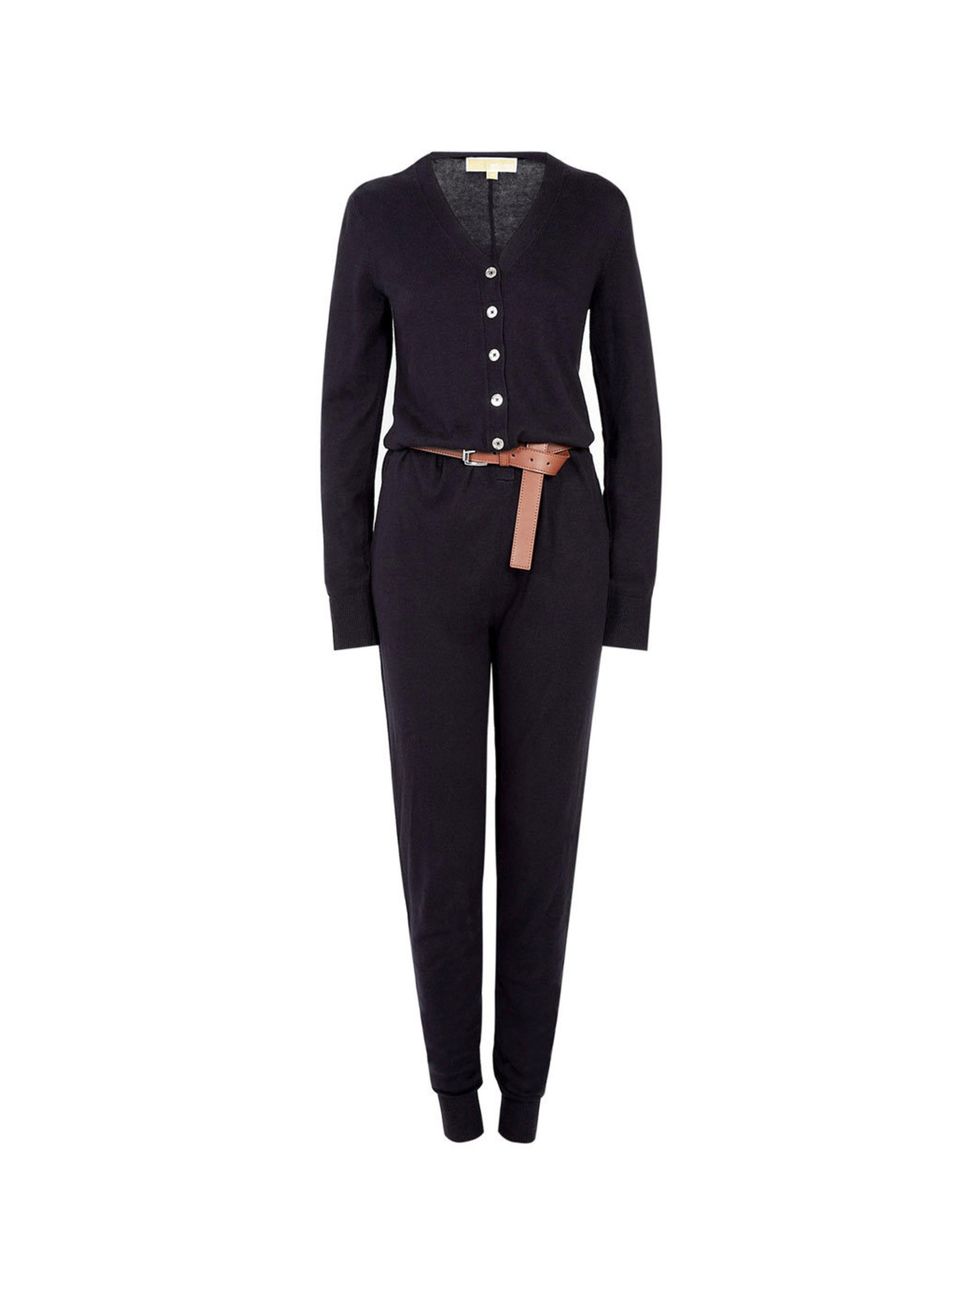 <p>MICHAEL Michael Kors belted jumpsuit, £170, at <a href="http://www.my-wardrobe.com/michael-michael-kors/cardigan-sweater-belted-jumpsuit-517743">my-wardrobe.com</a></p>